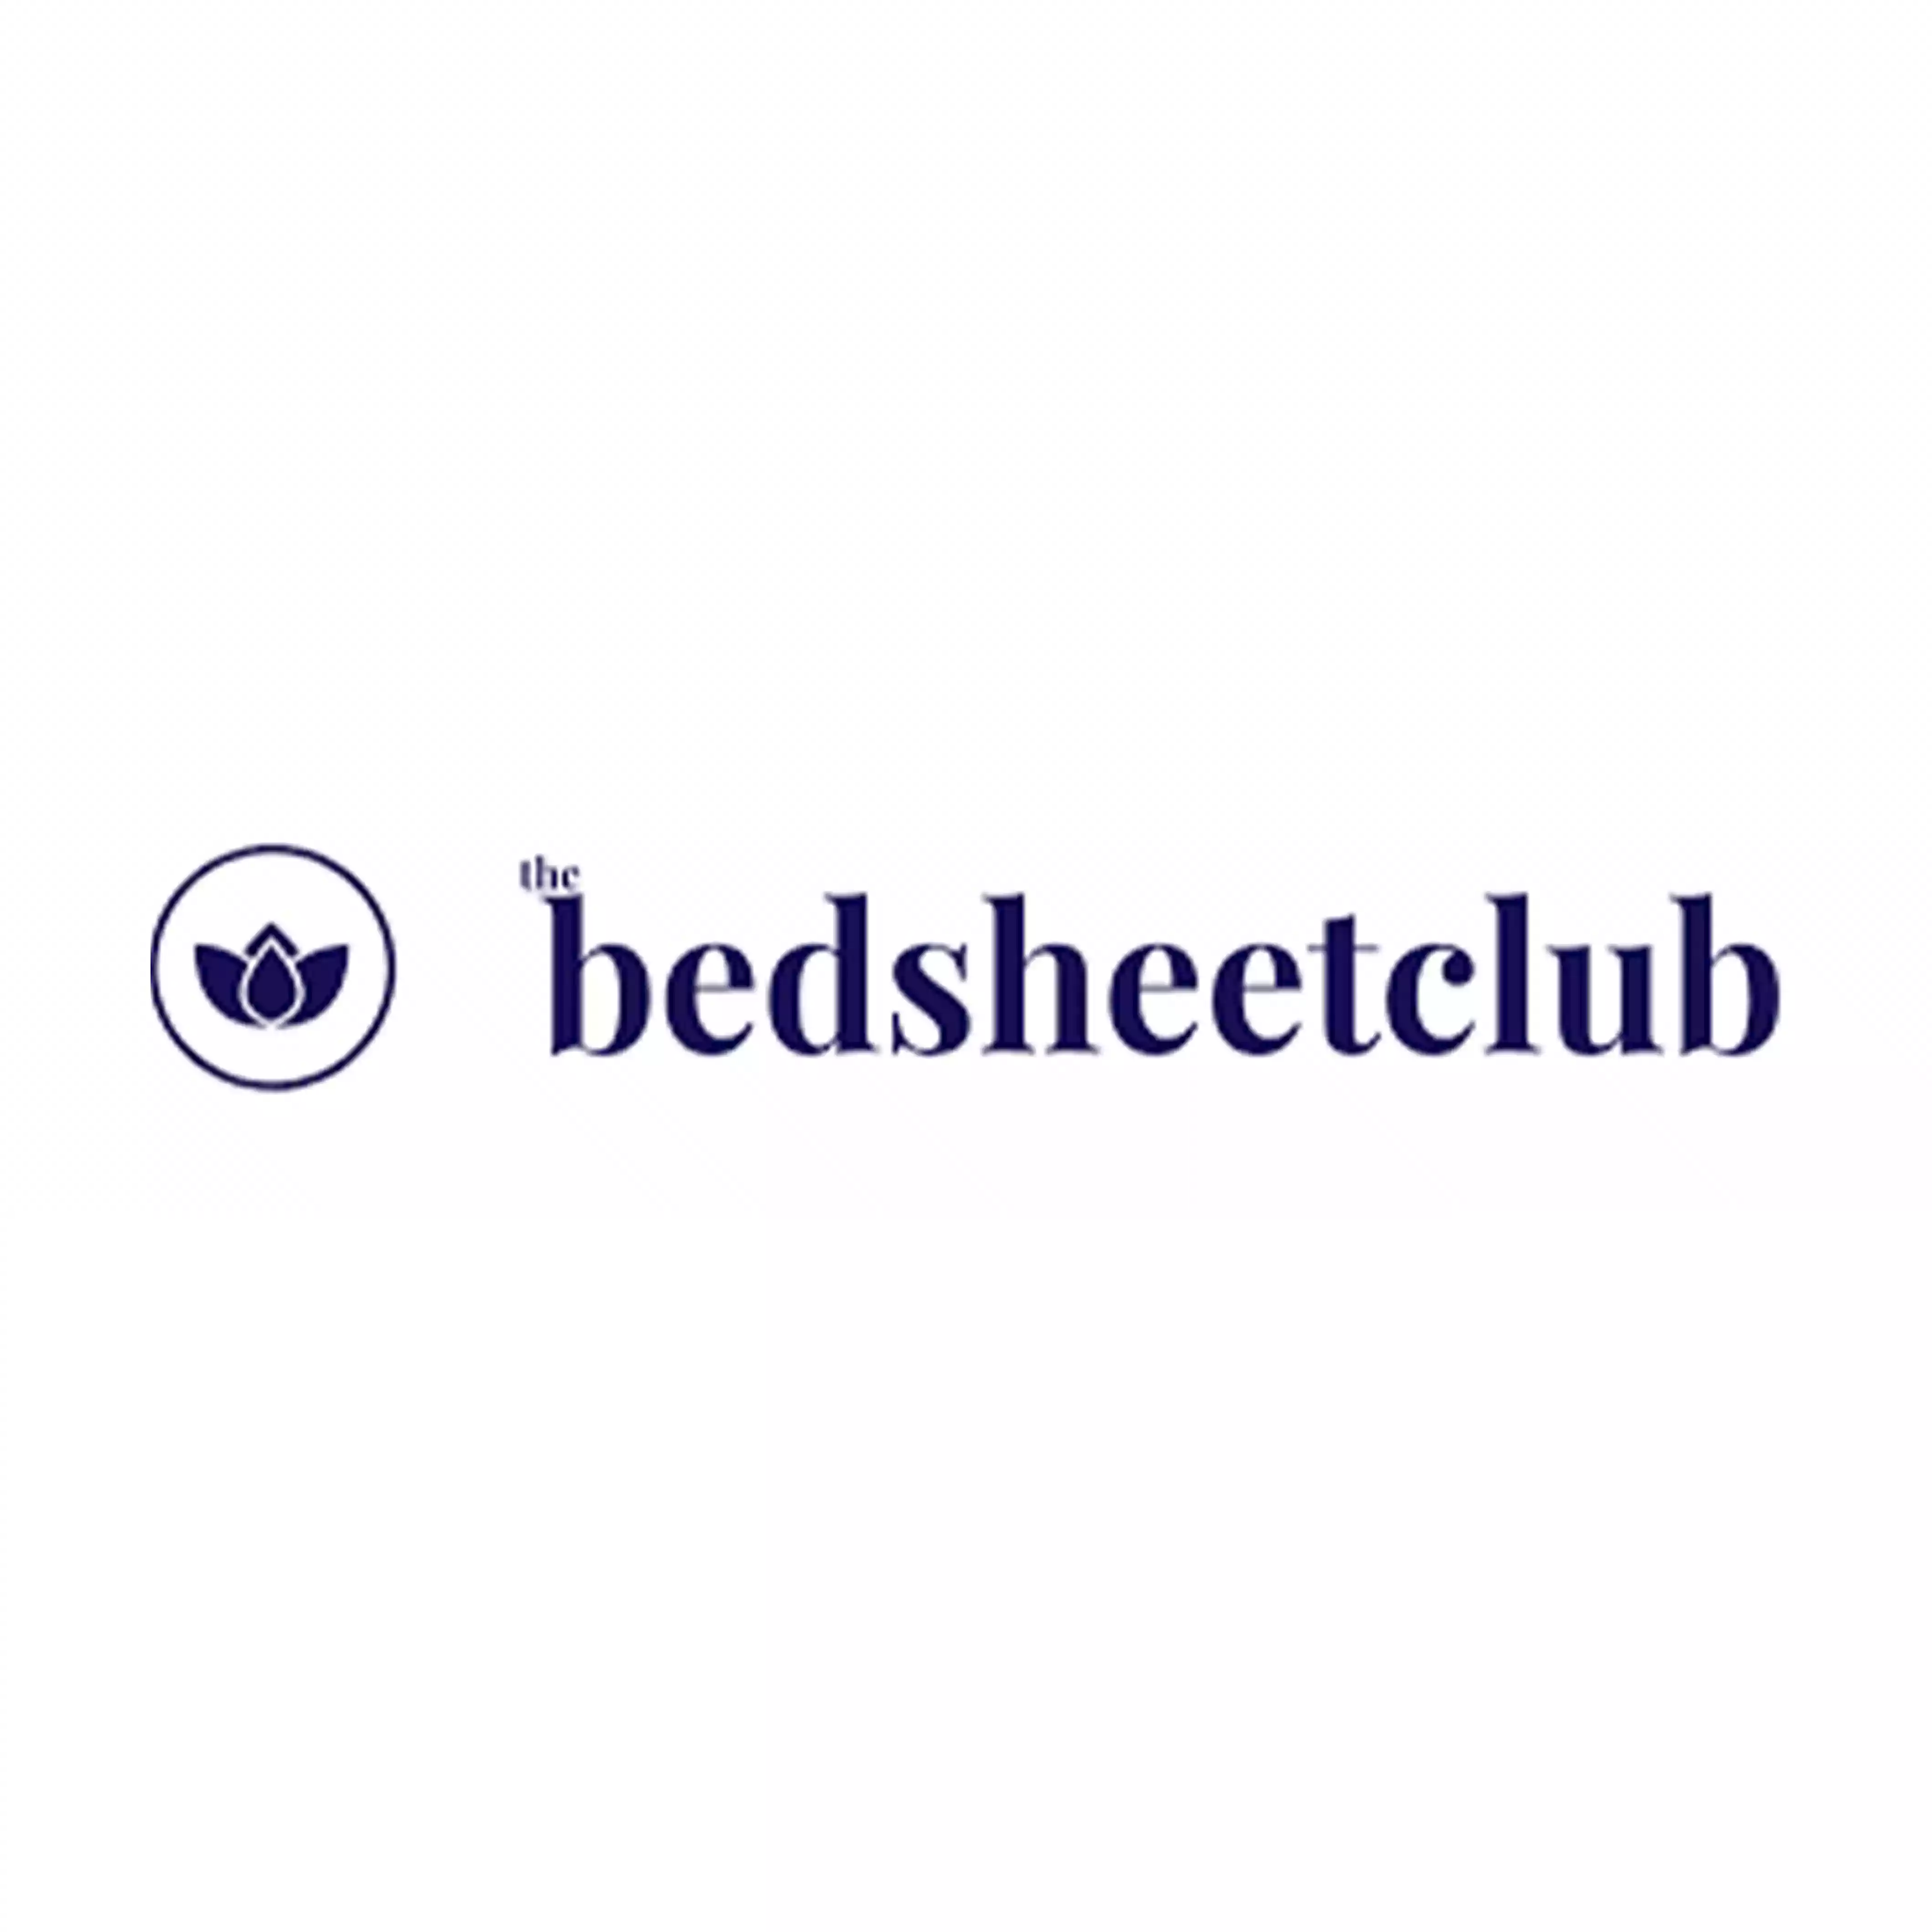 The BedSheet Club logo